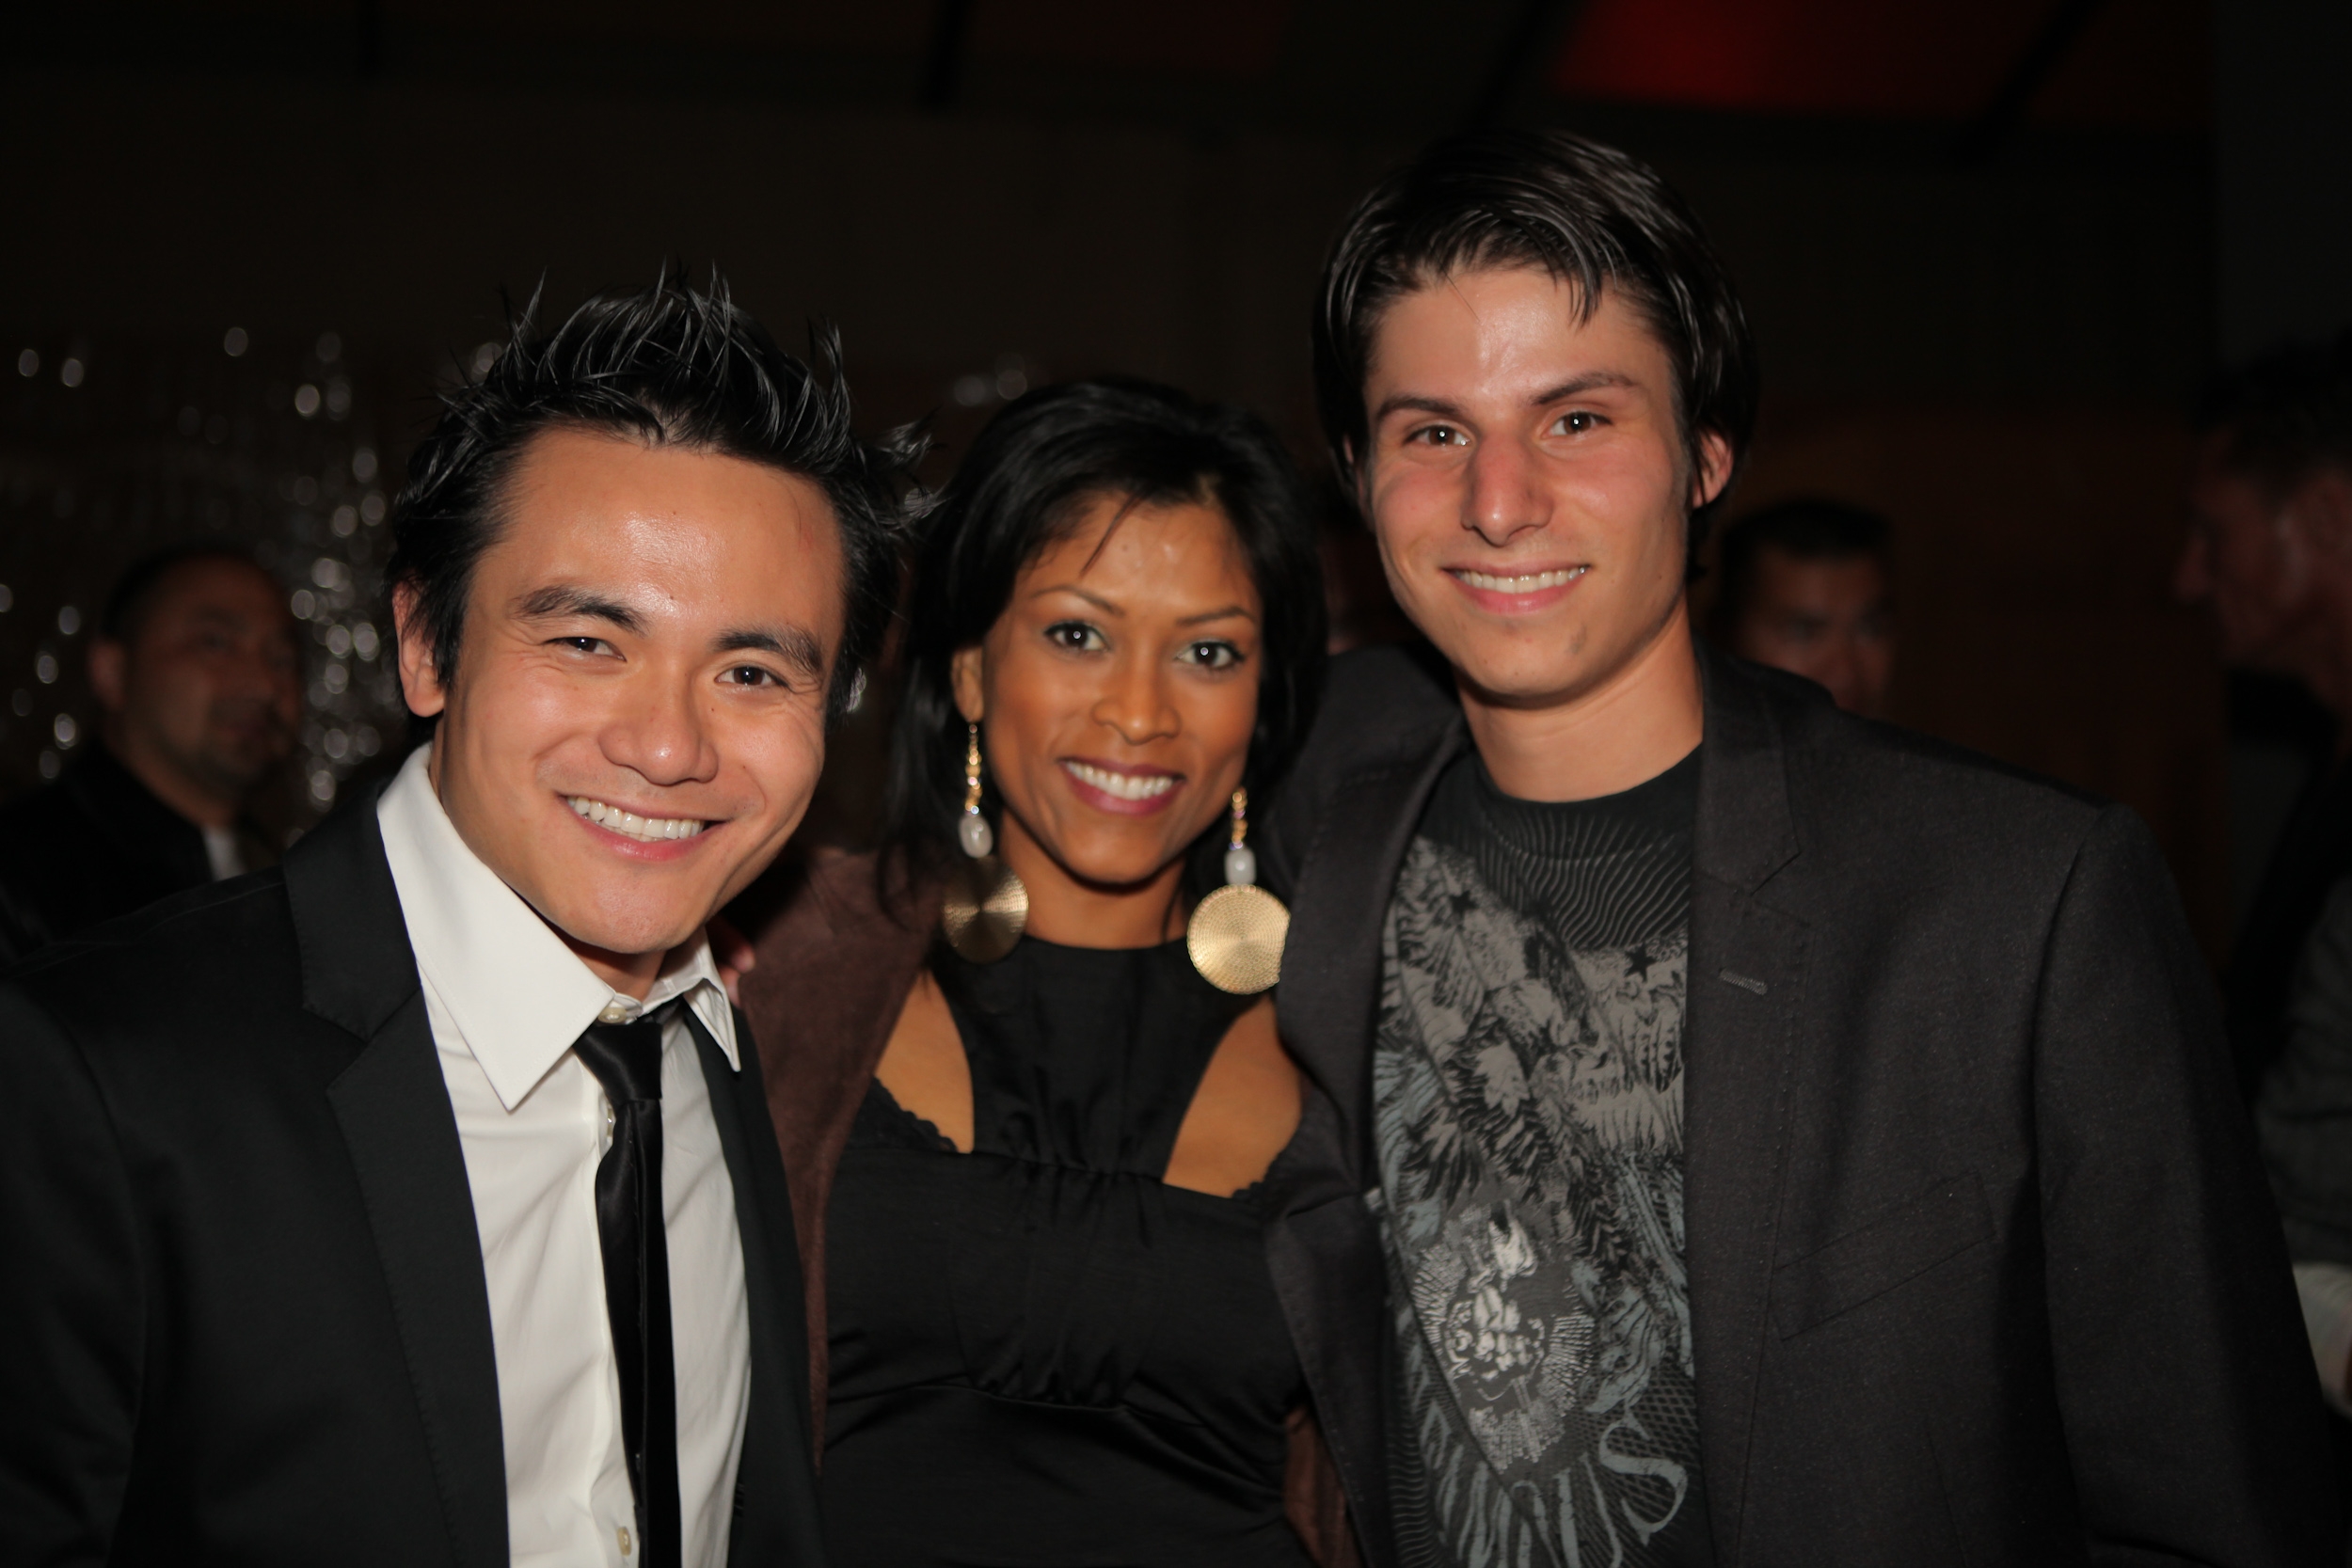 Stars Adrian Zaw, Jo Mani, Director Nick Acosta at The Resistance Premiere. 2010